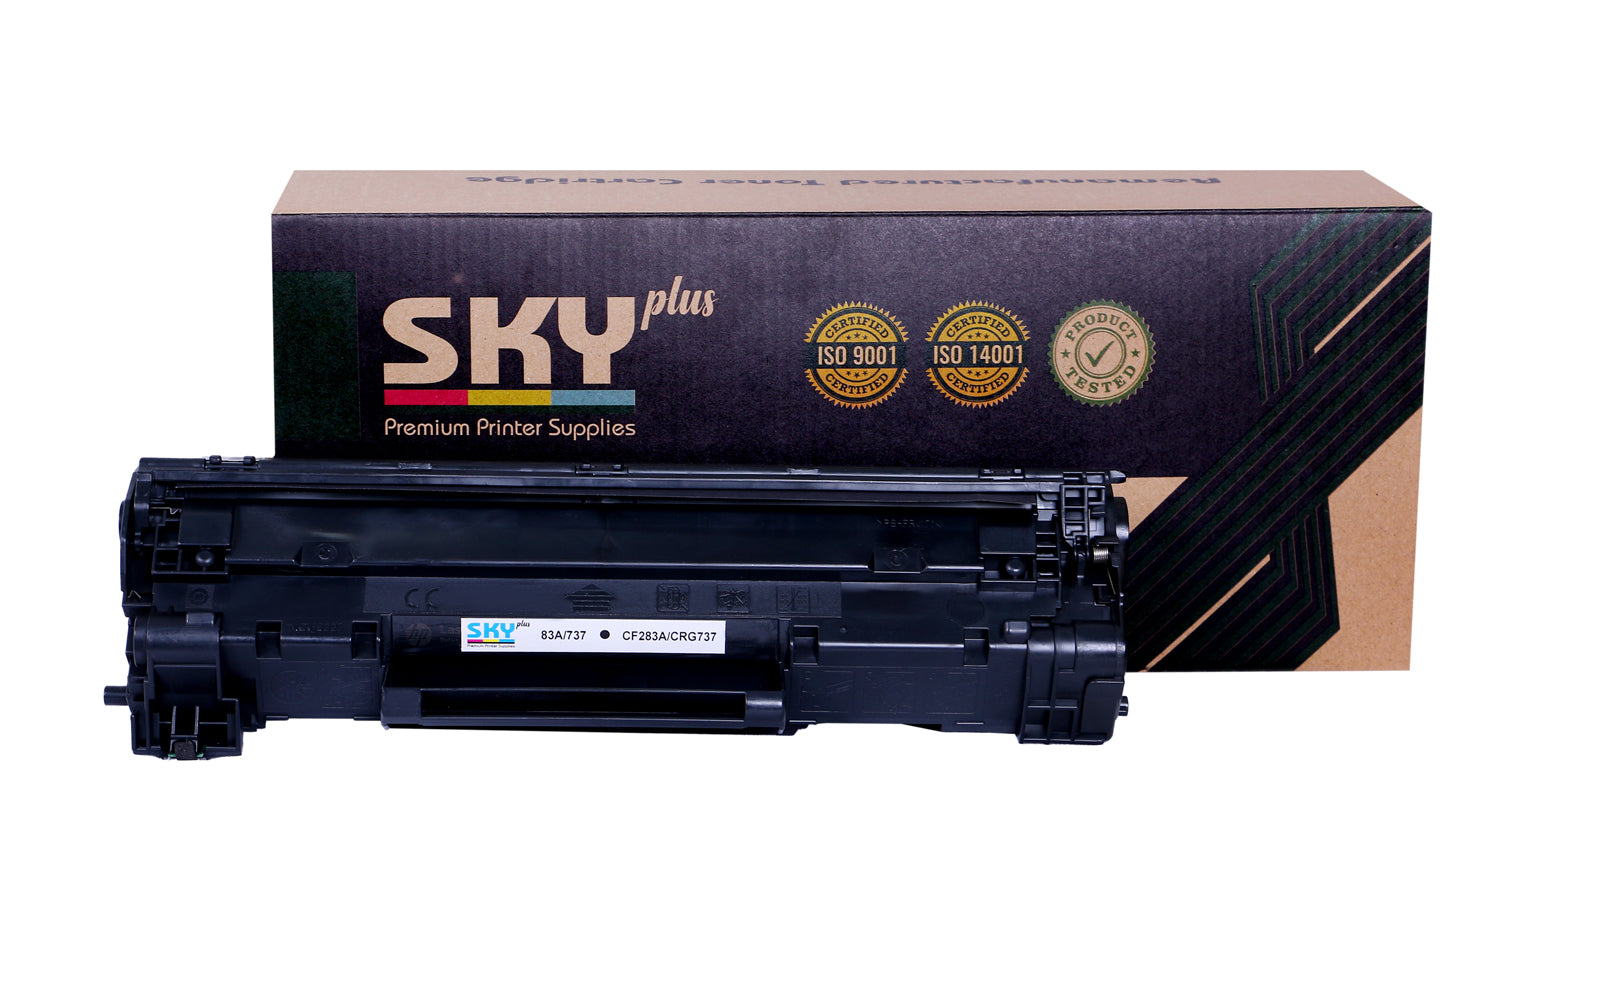 SKY  Plus 737 Remanufactured Toner Cartridge Canon i-SENSYS MF232w and  MF237w